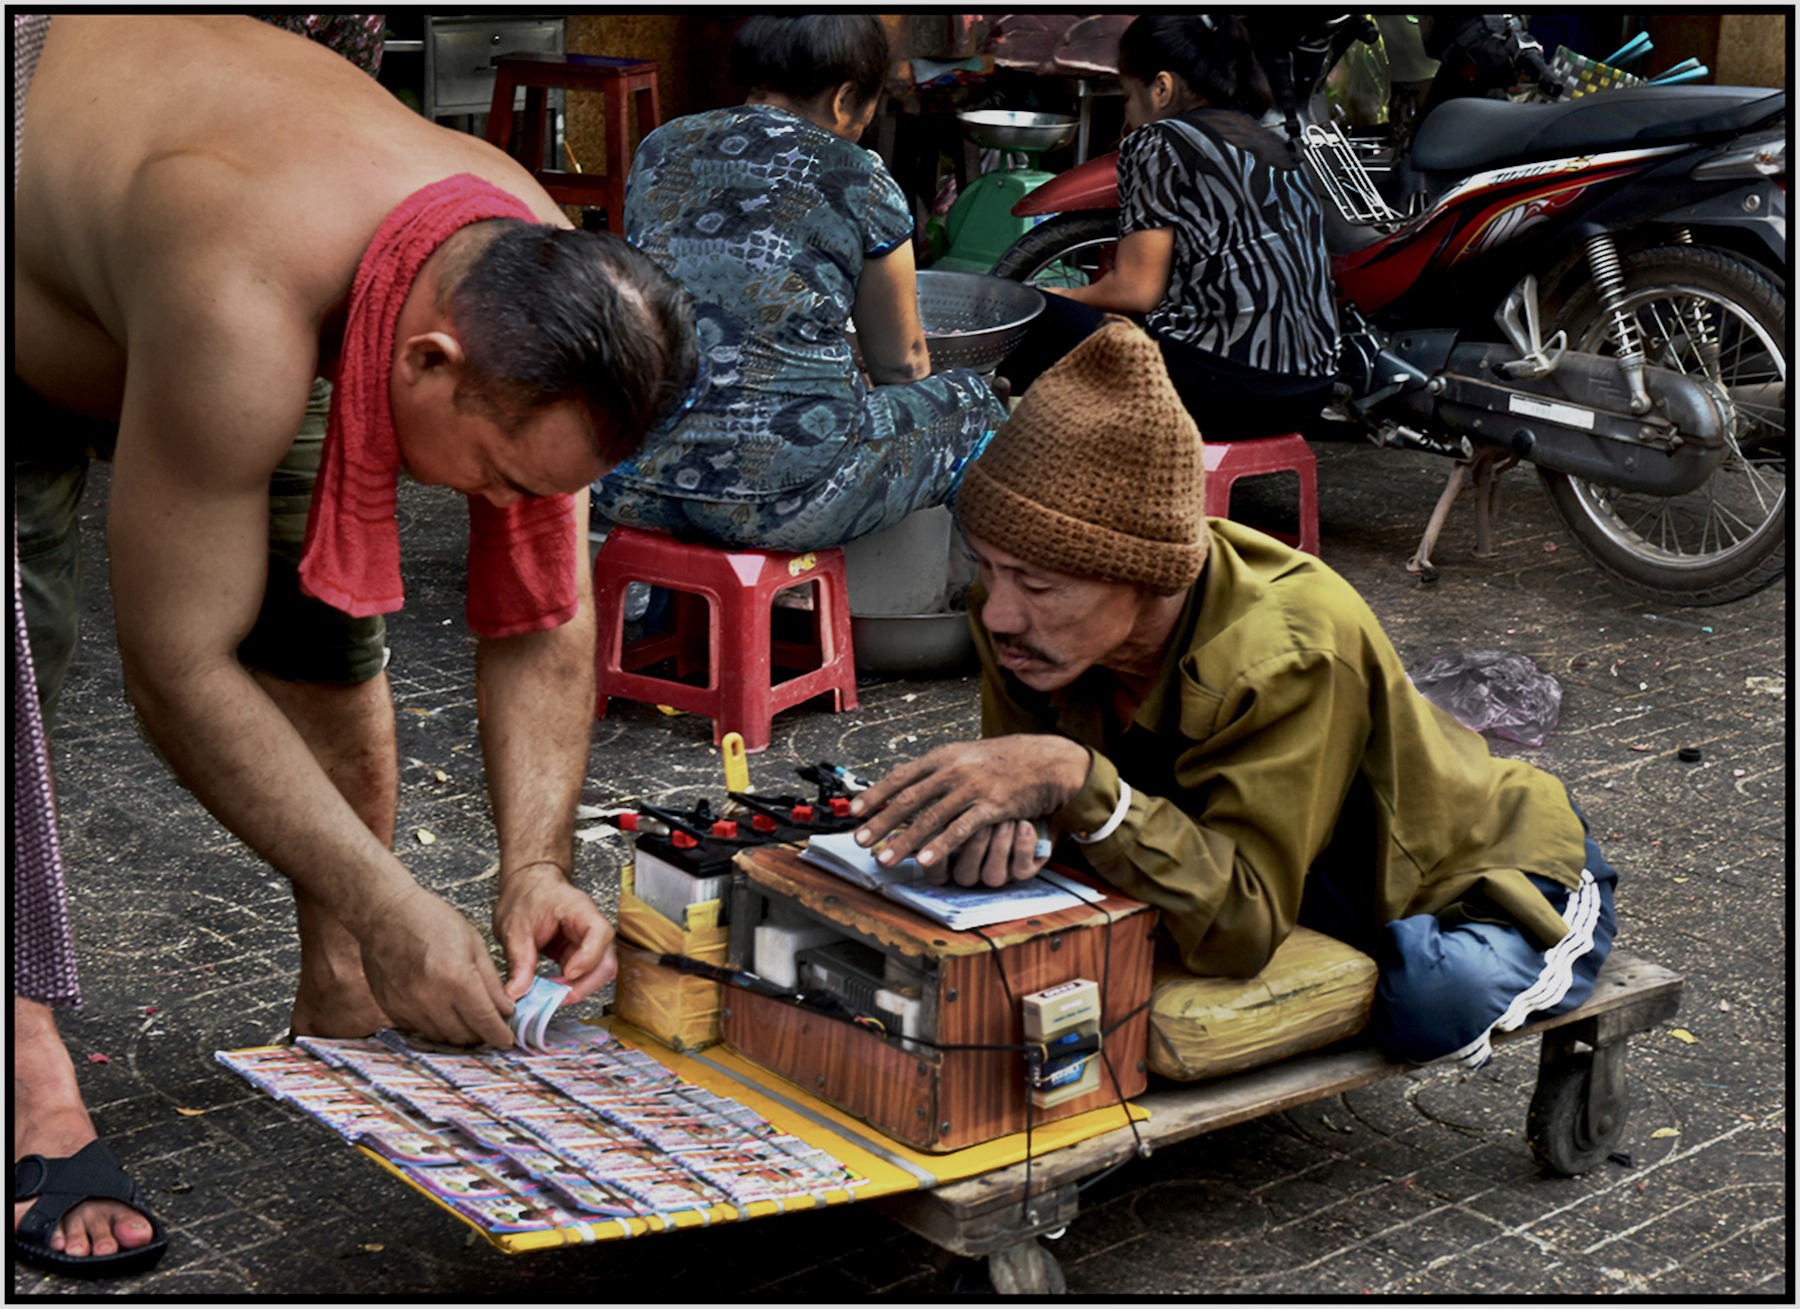  Man with no legs sells lottery tickets amidst vendors at the Binh Tay Market, Cholon, Saigon/HCMC, Dec. 2015. #3848 